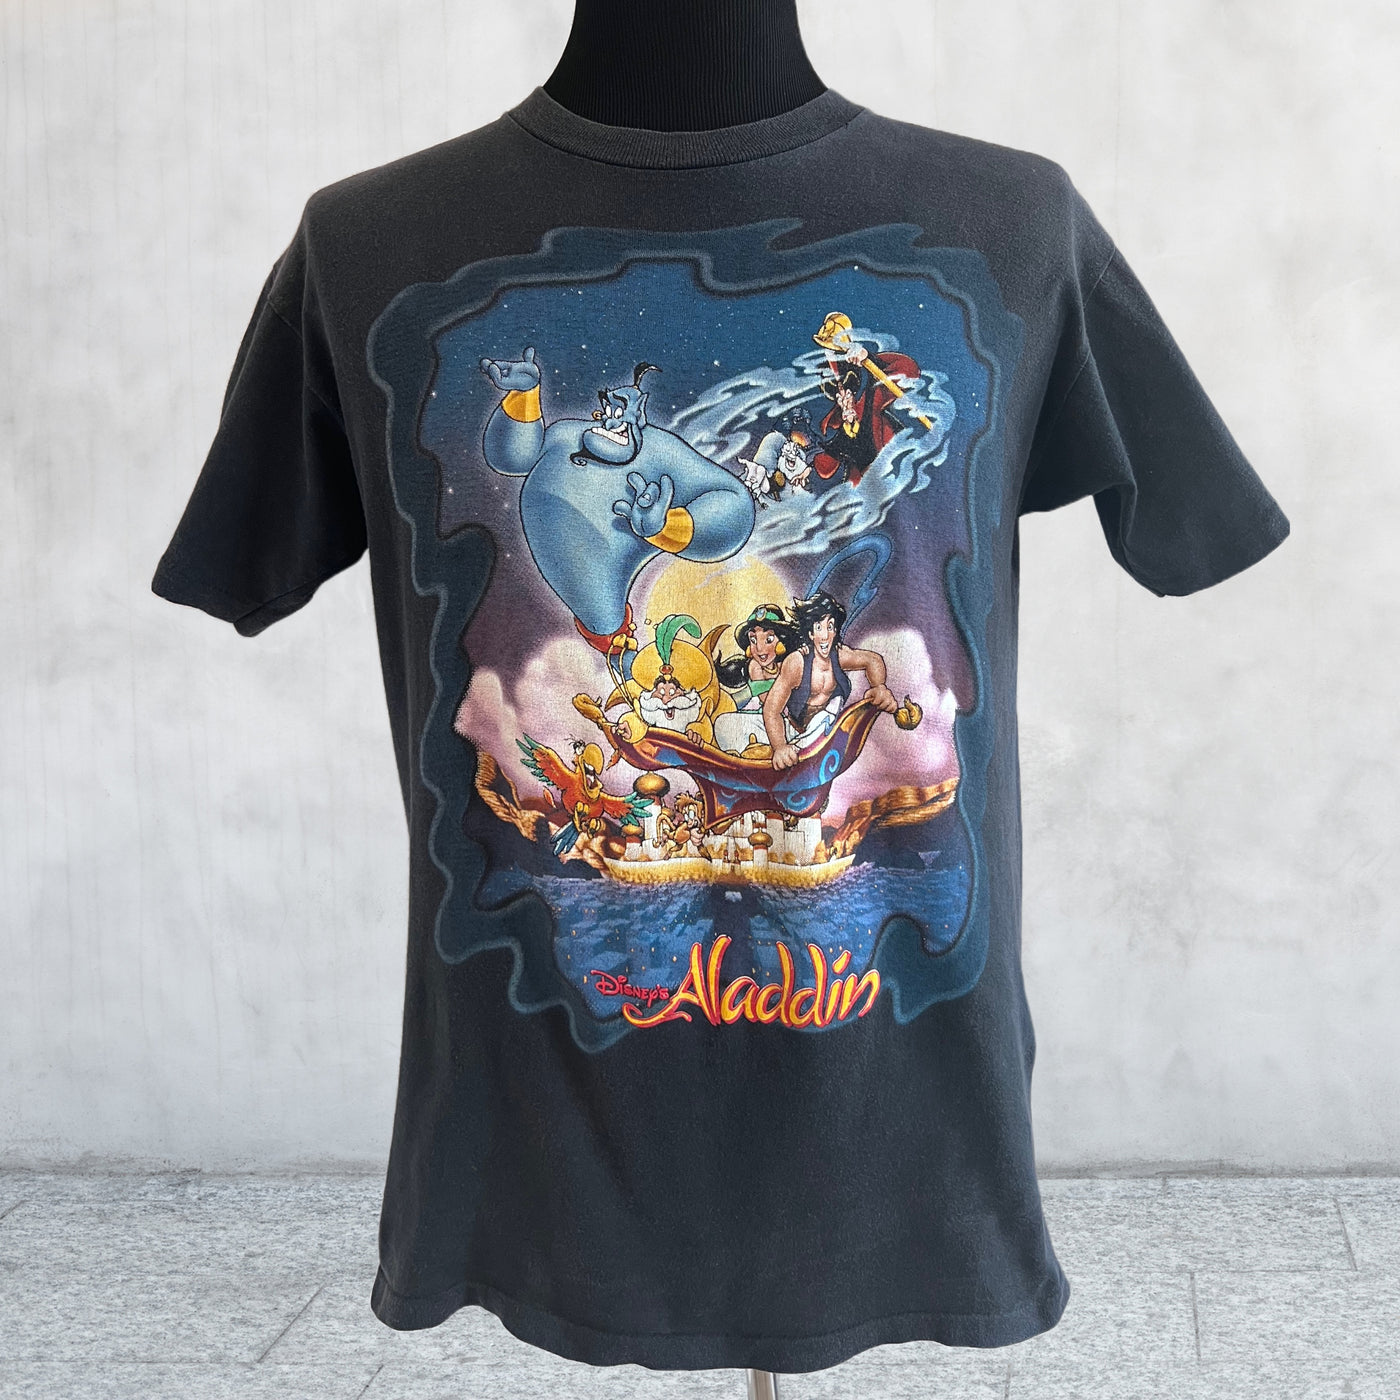 Rare Vintage Disney Aladdin T-shirt. Shirt front view